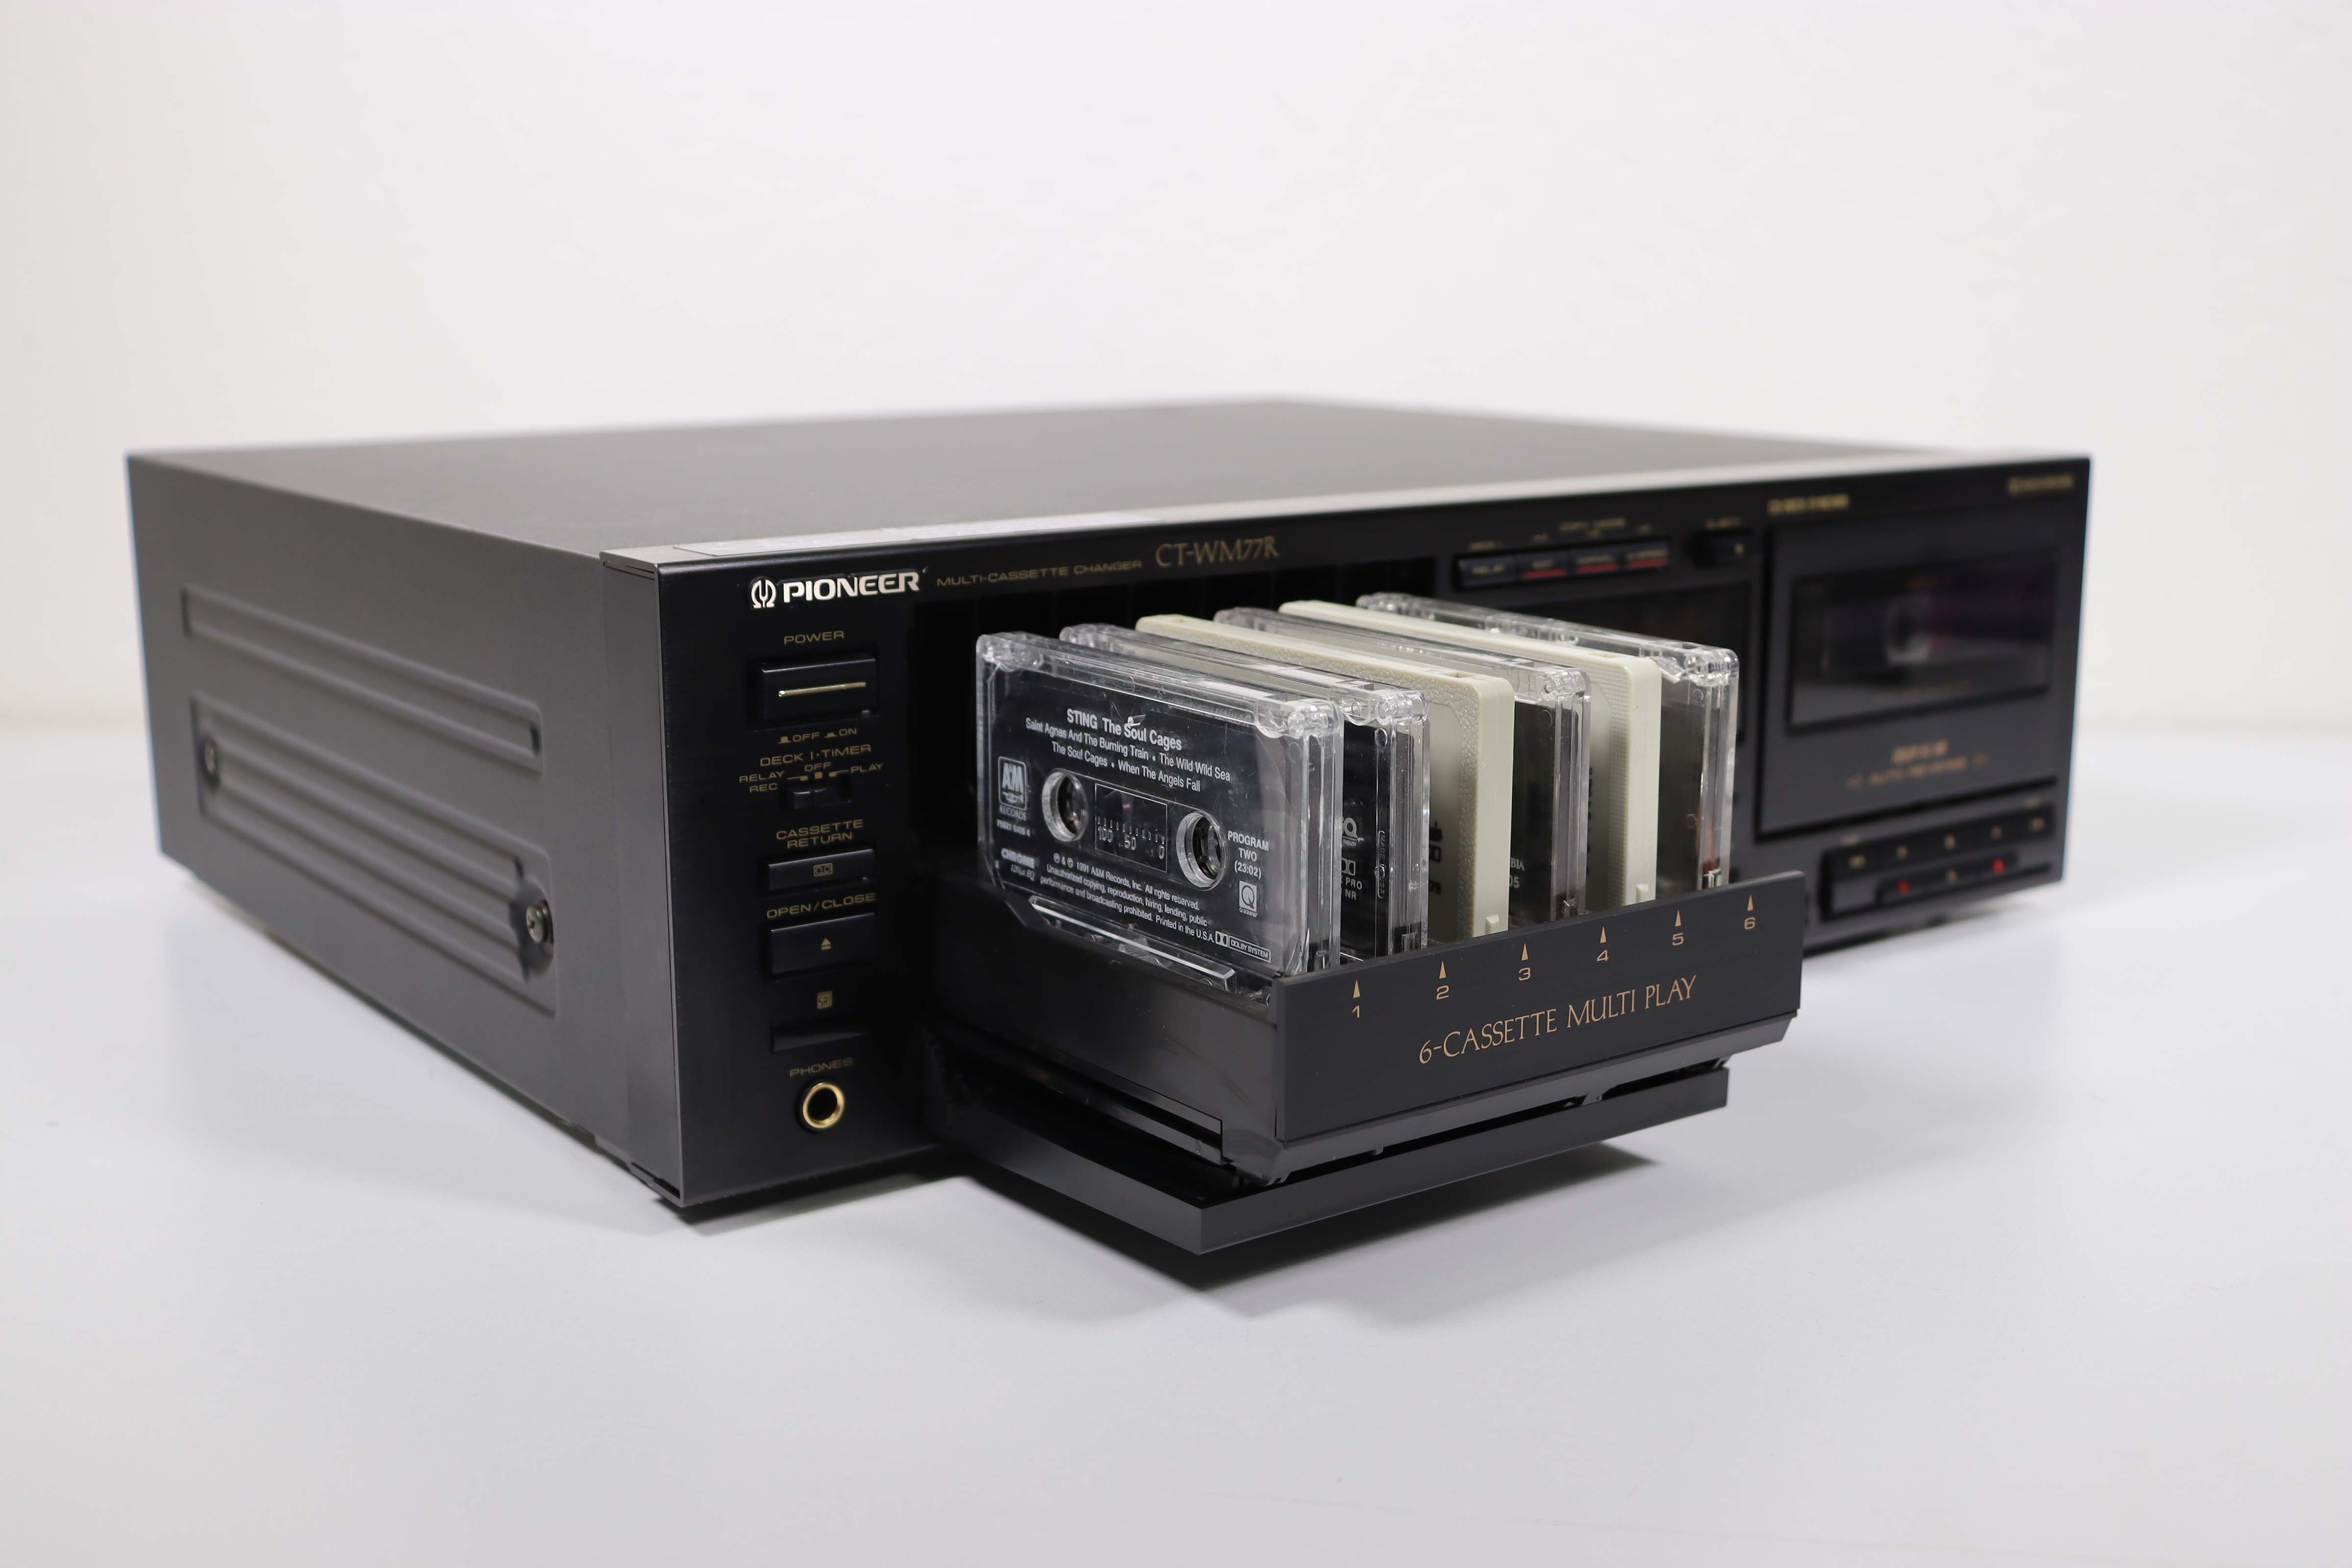 Pioneer CT-WM77R Dual Tape Deck 6-Cassette Multi Play / Dolby HX Pro P